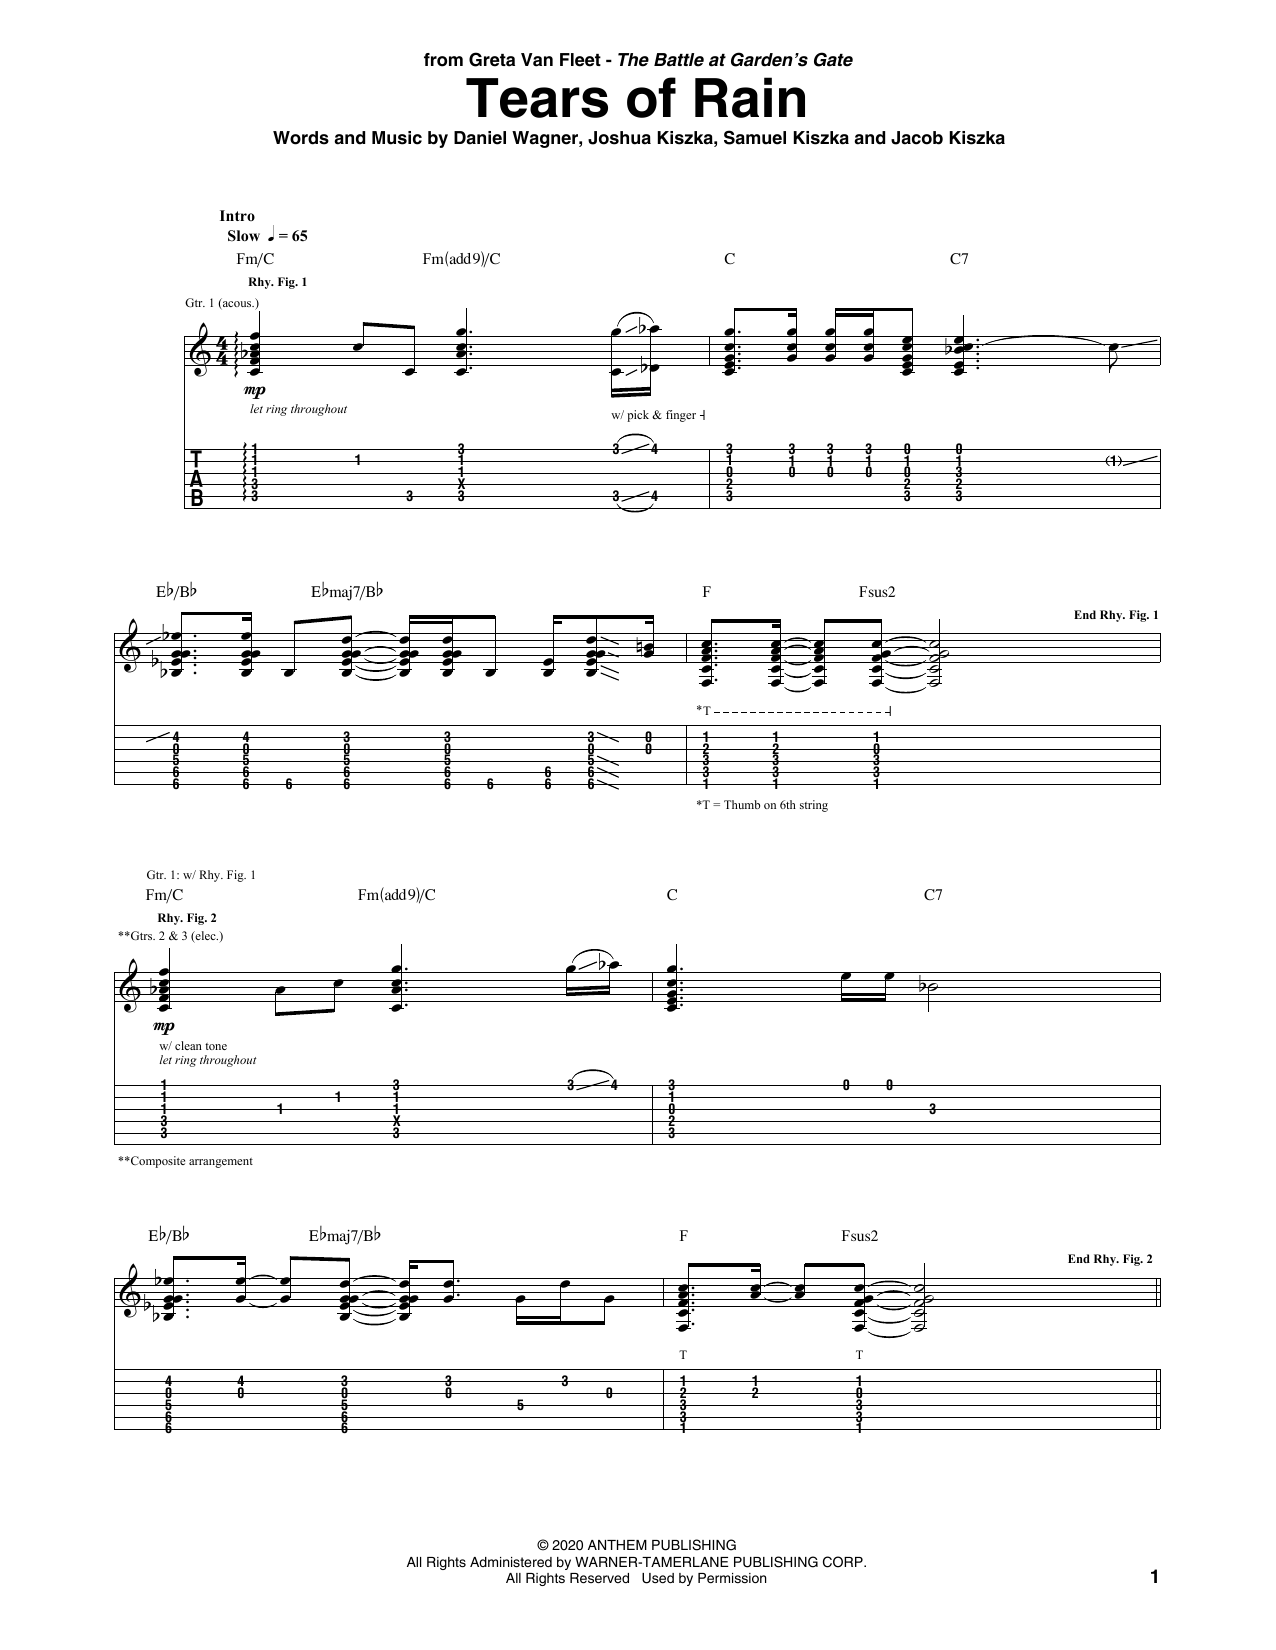 Greta Van Fleet Tears Of Rain Sheet Music Notes & Chords for Guitar Tab - Download or Print PDF